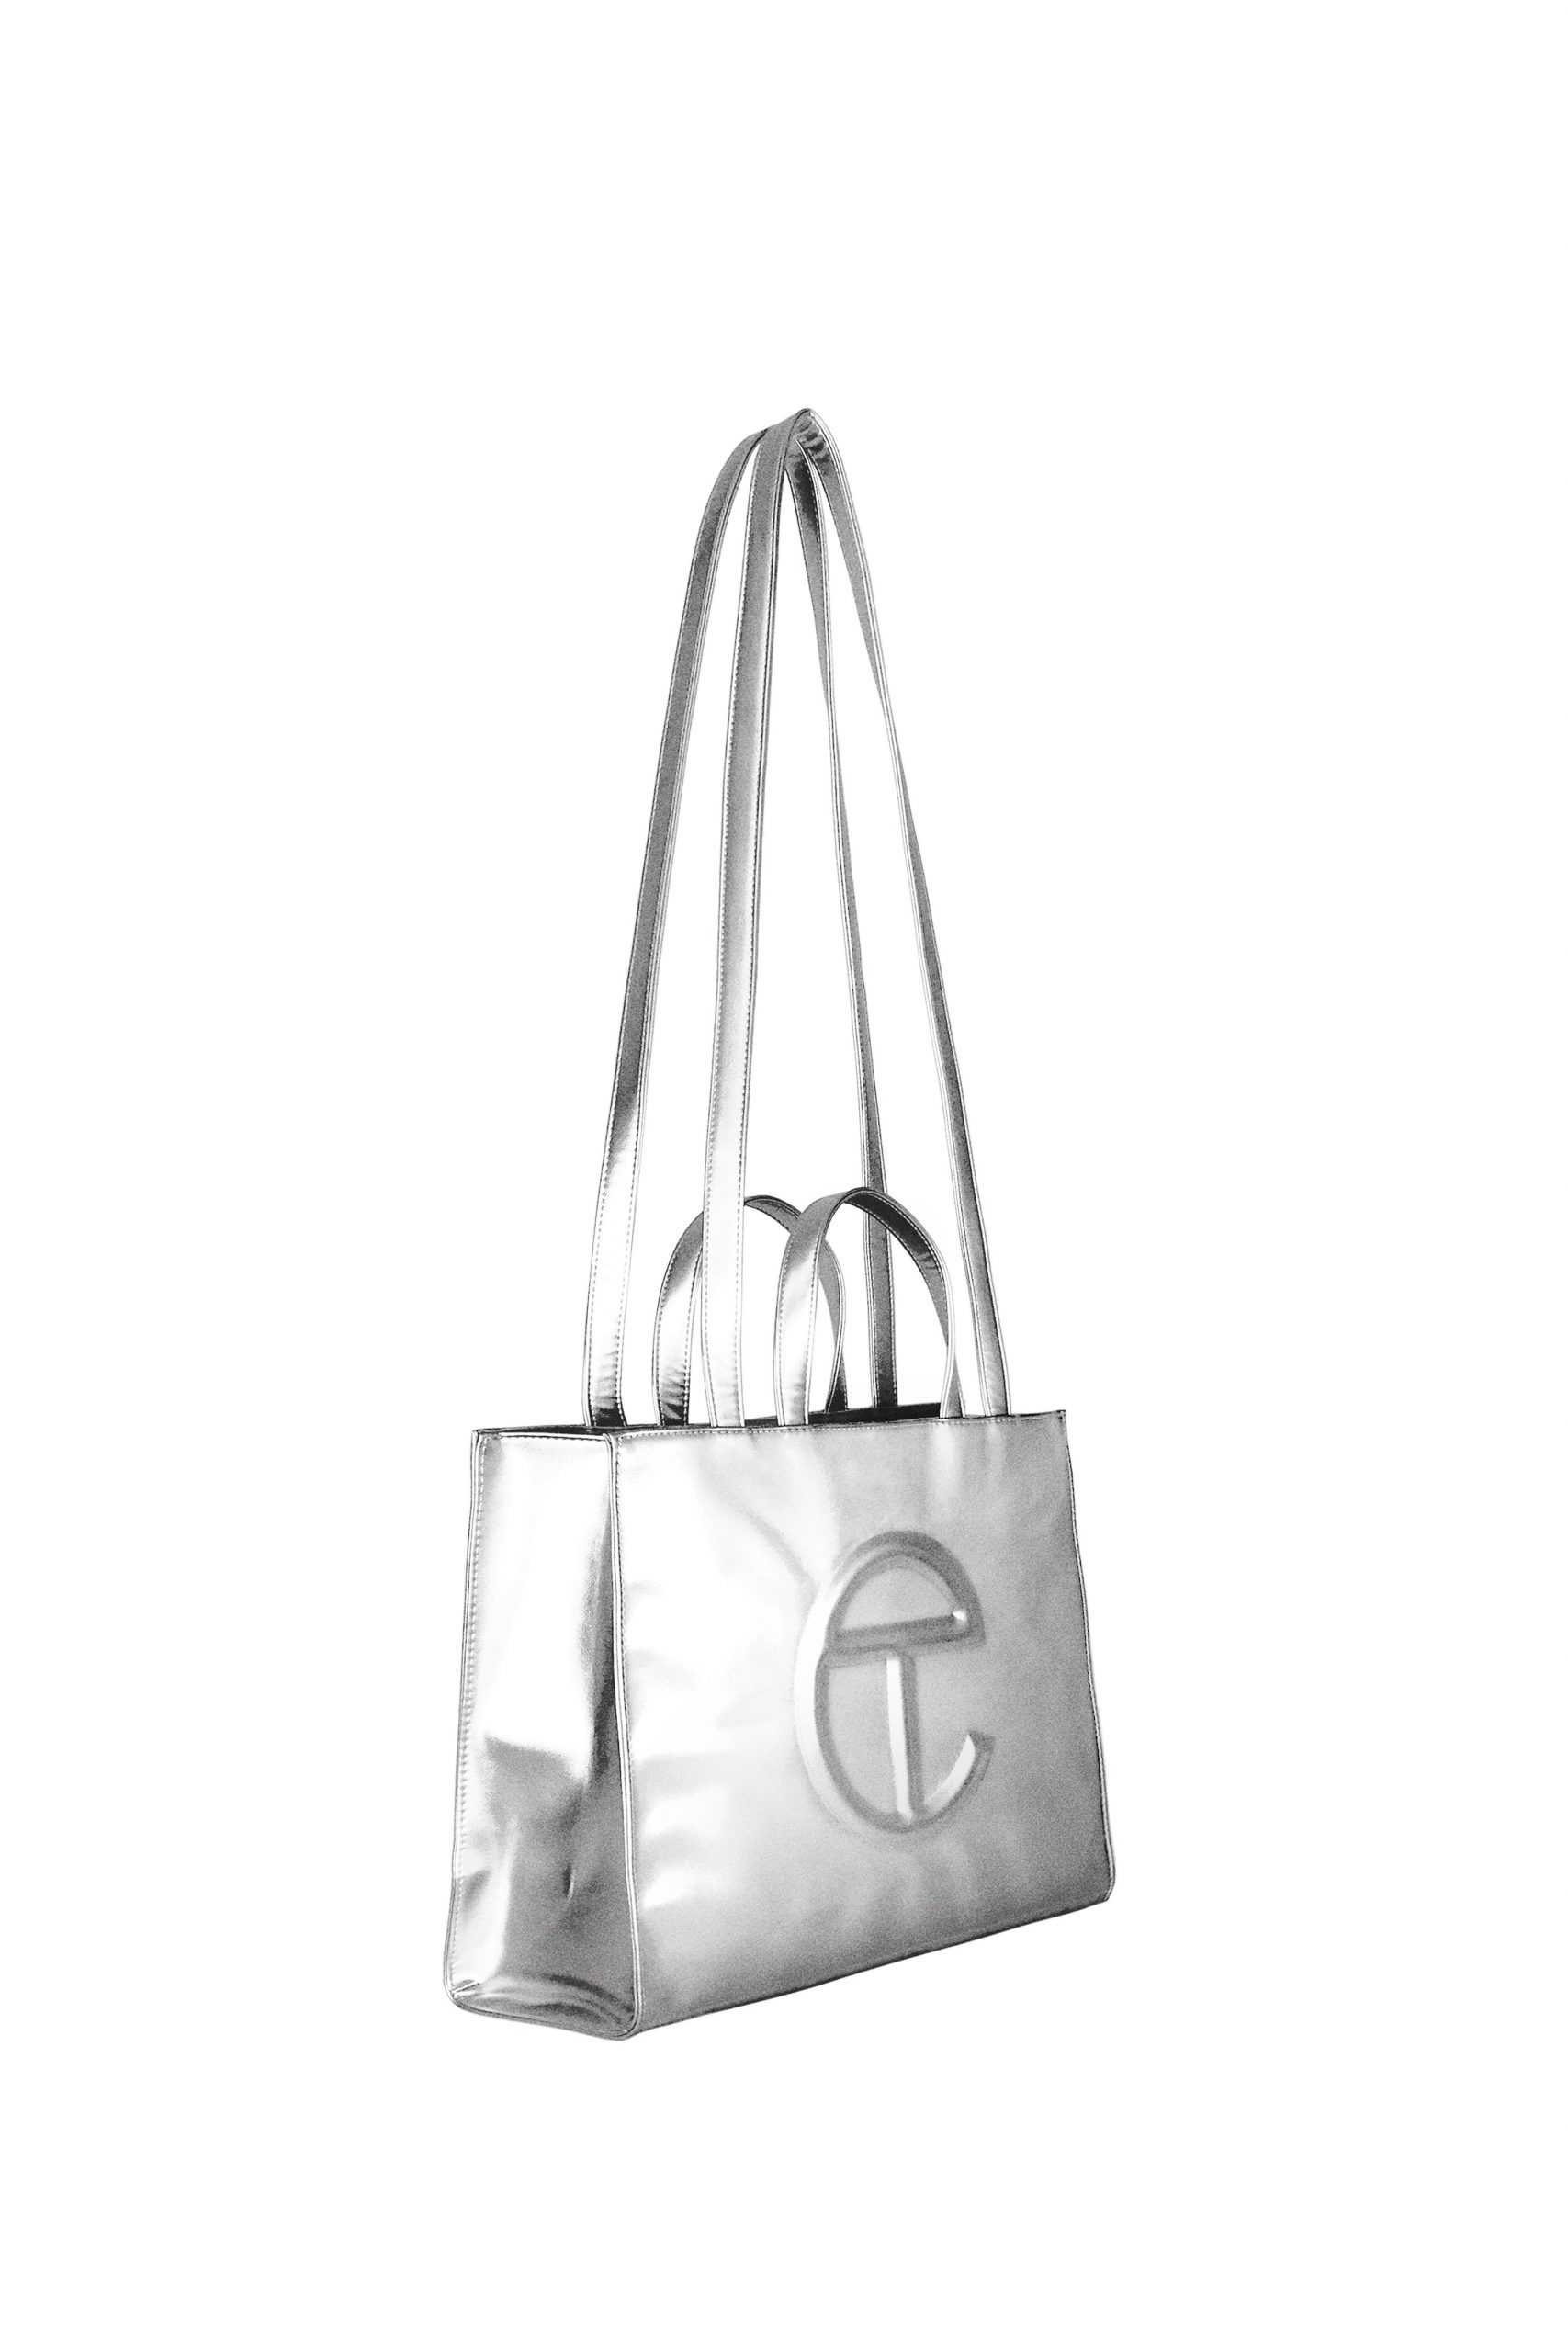 Medium Silver Shopping Bag